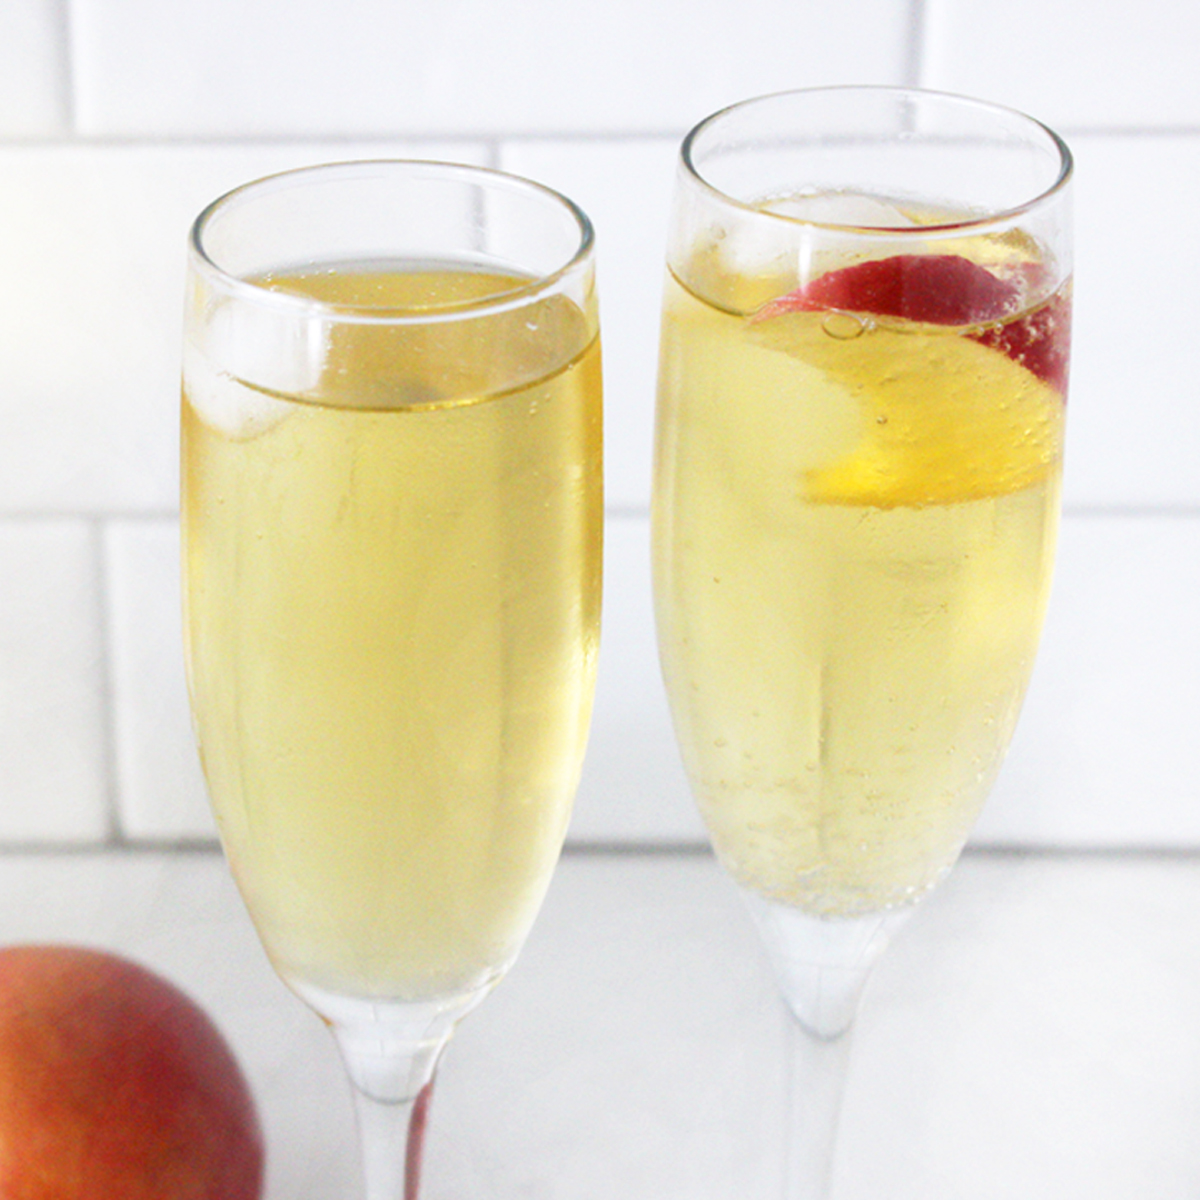 Two glasses of sparkling apple cider against a white backsplash.